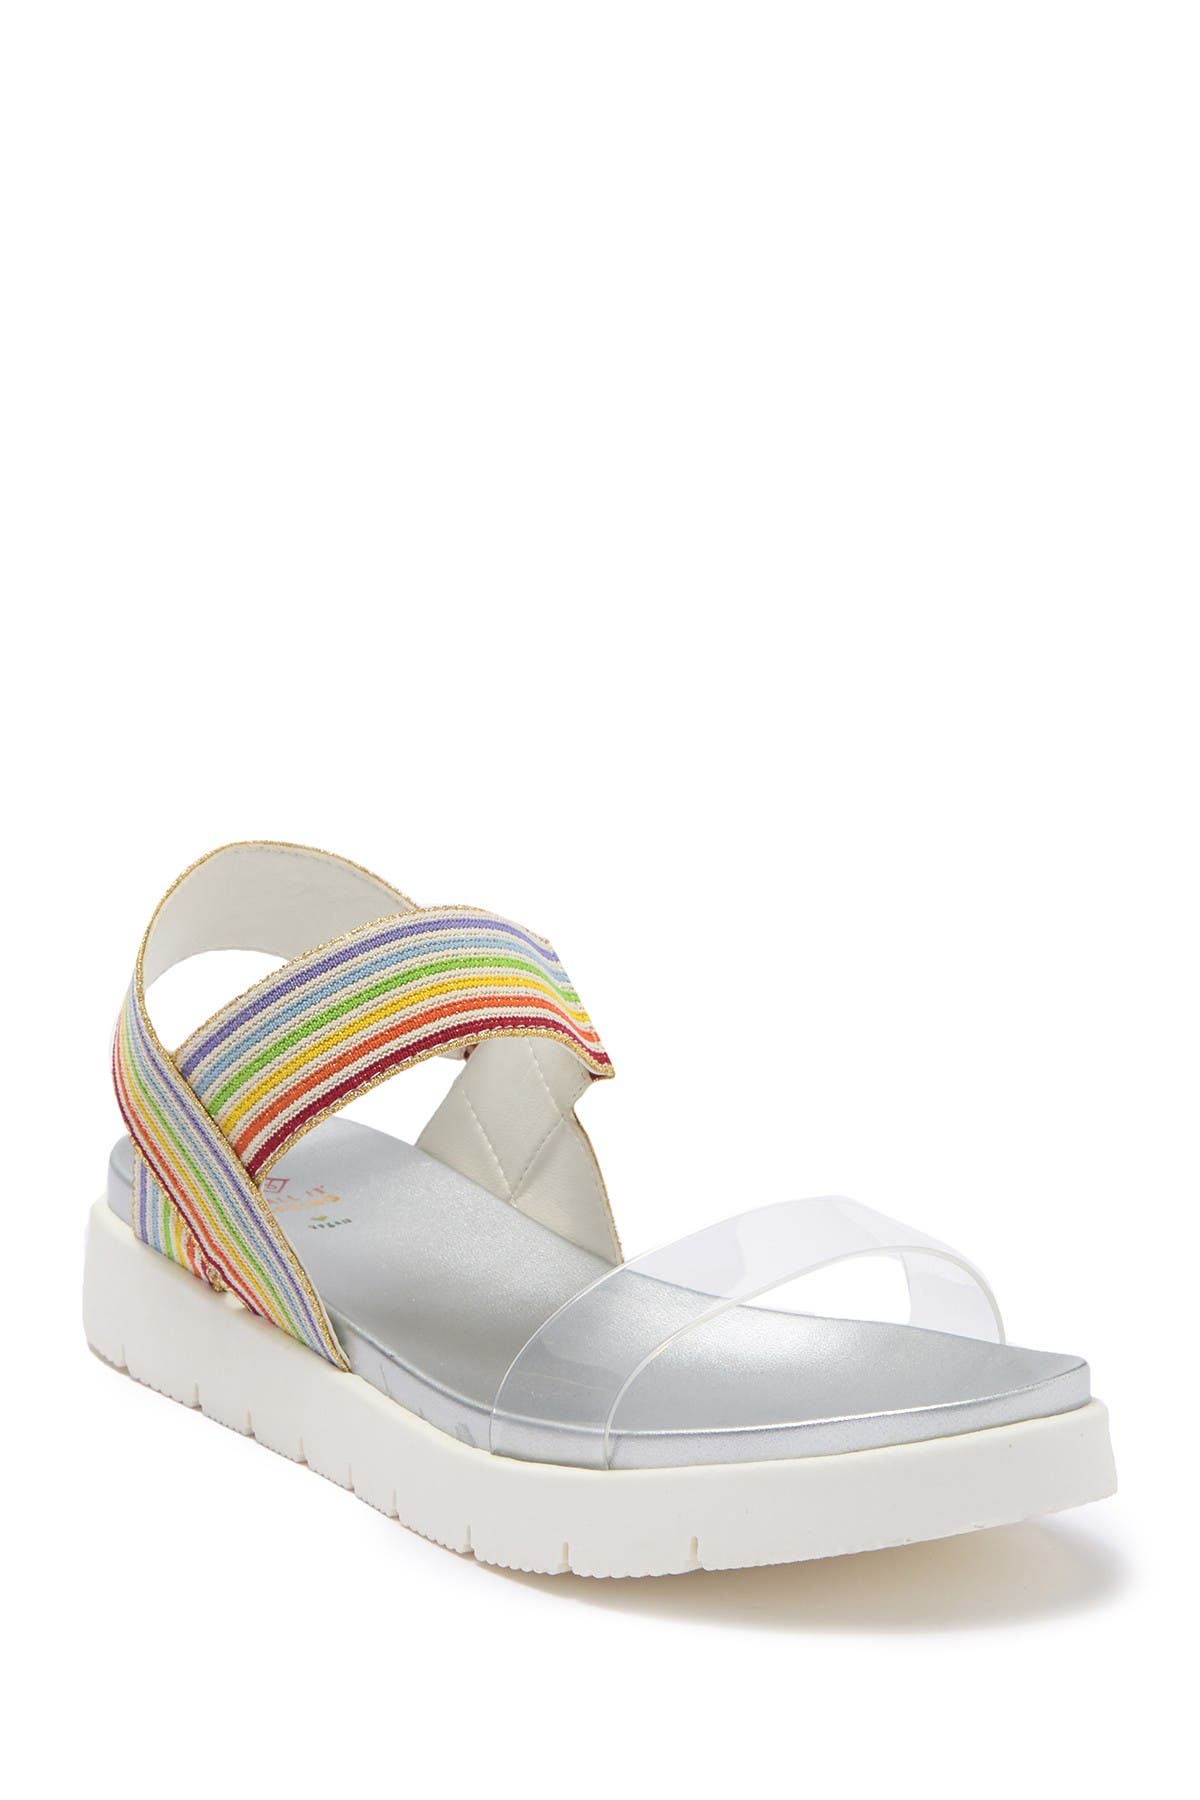 rainbow sandals nordstrom